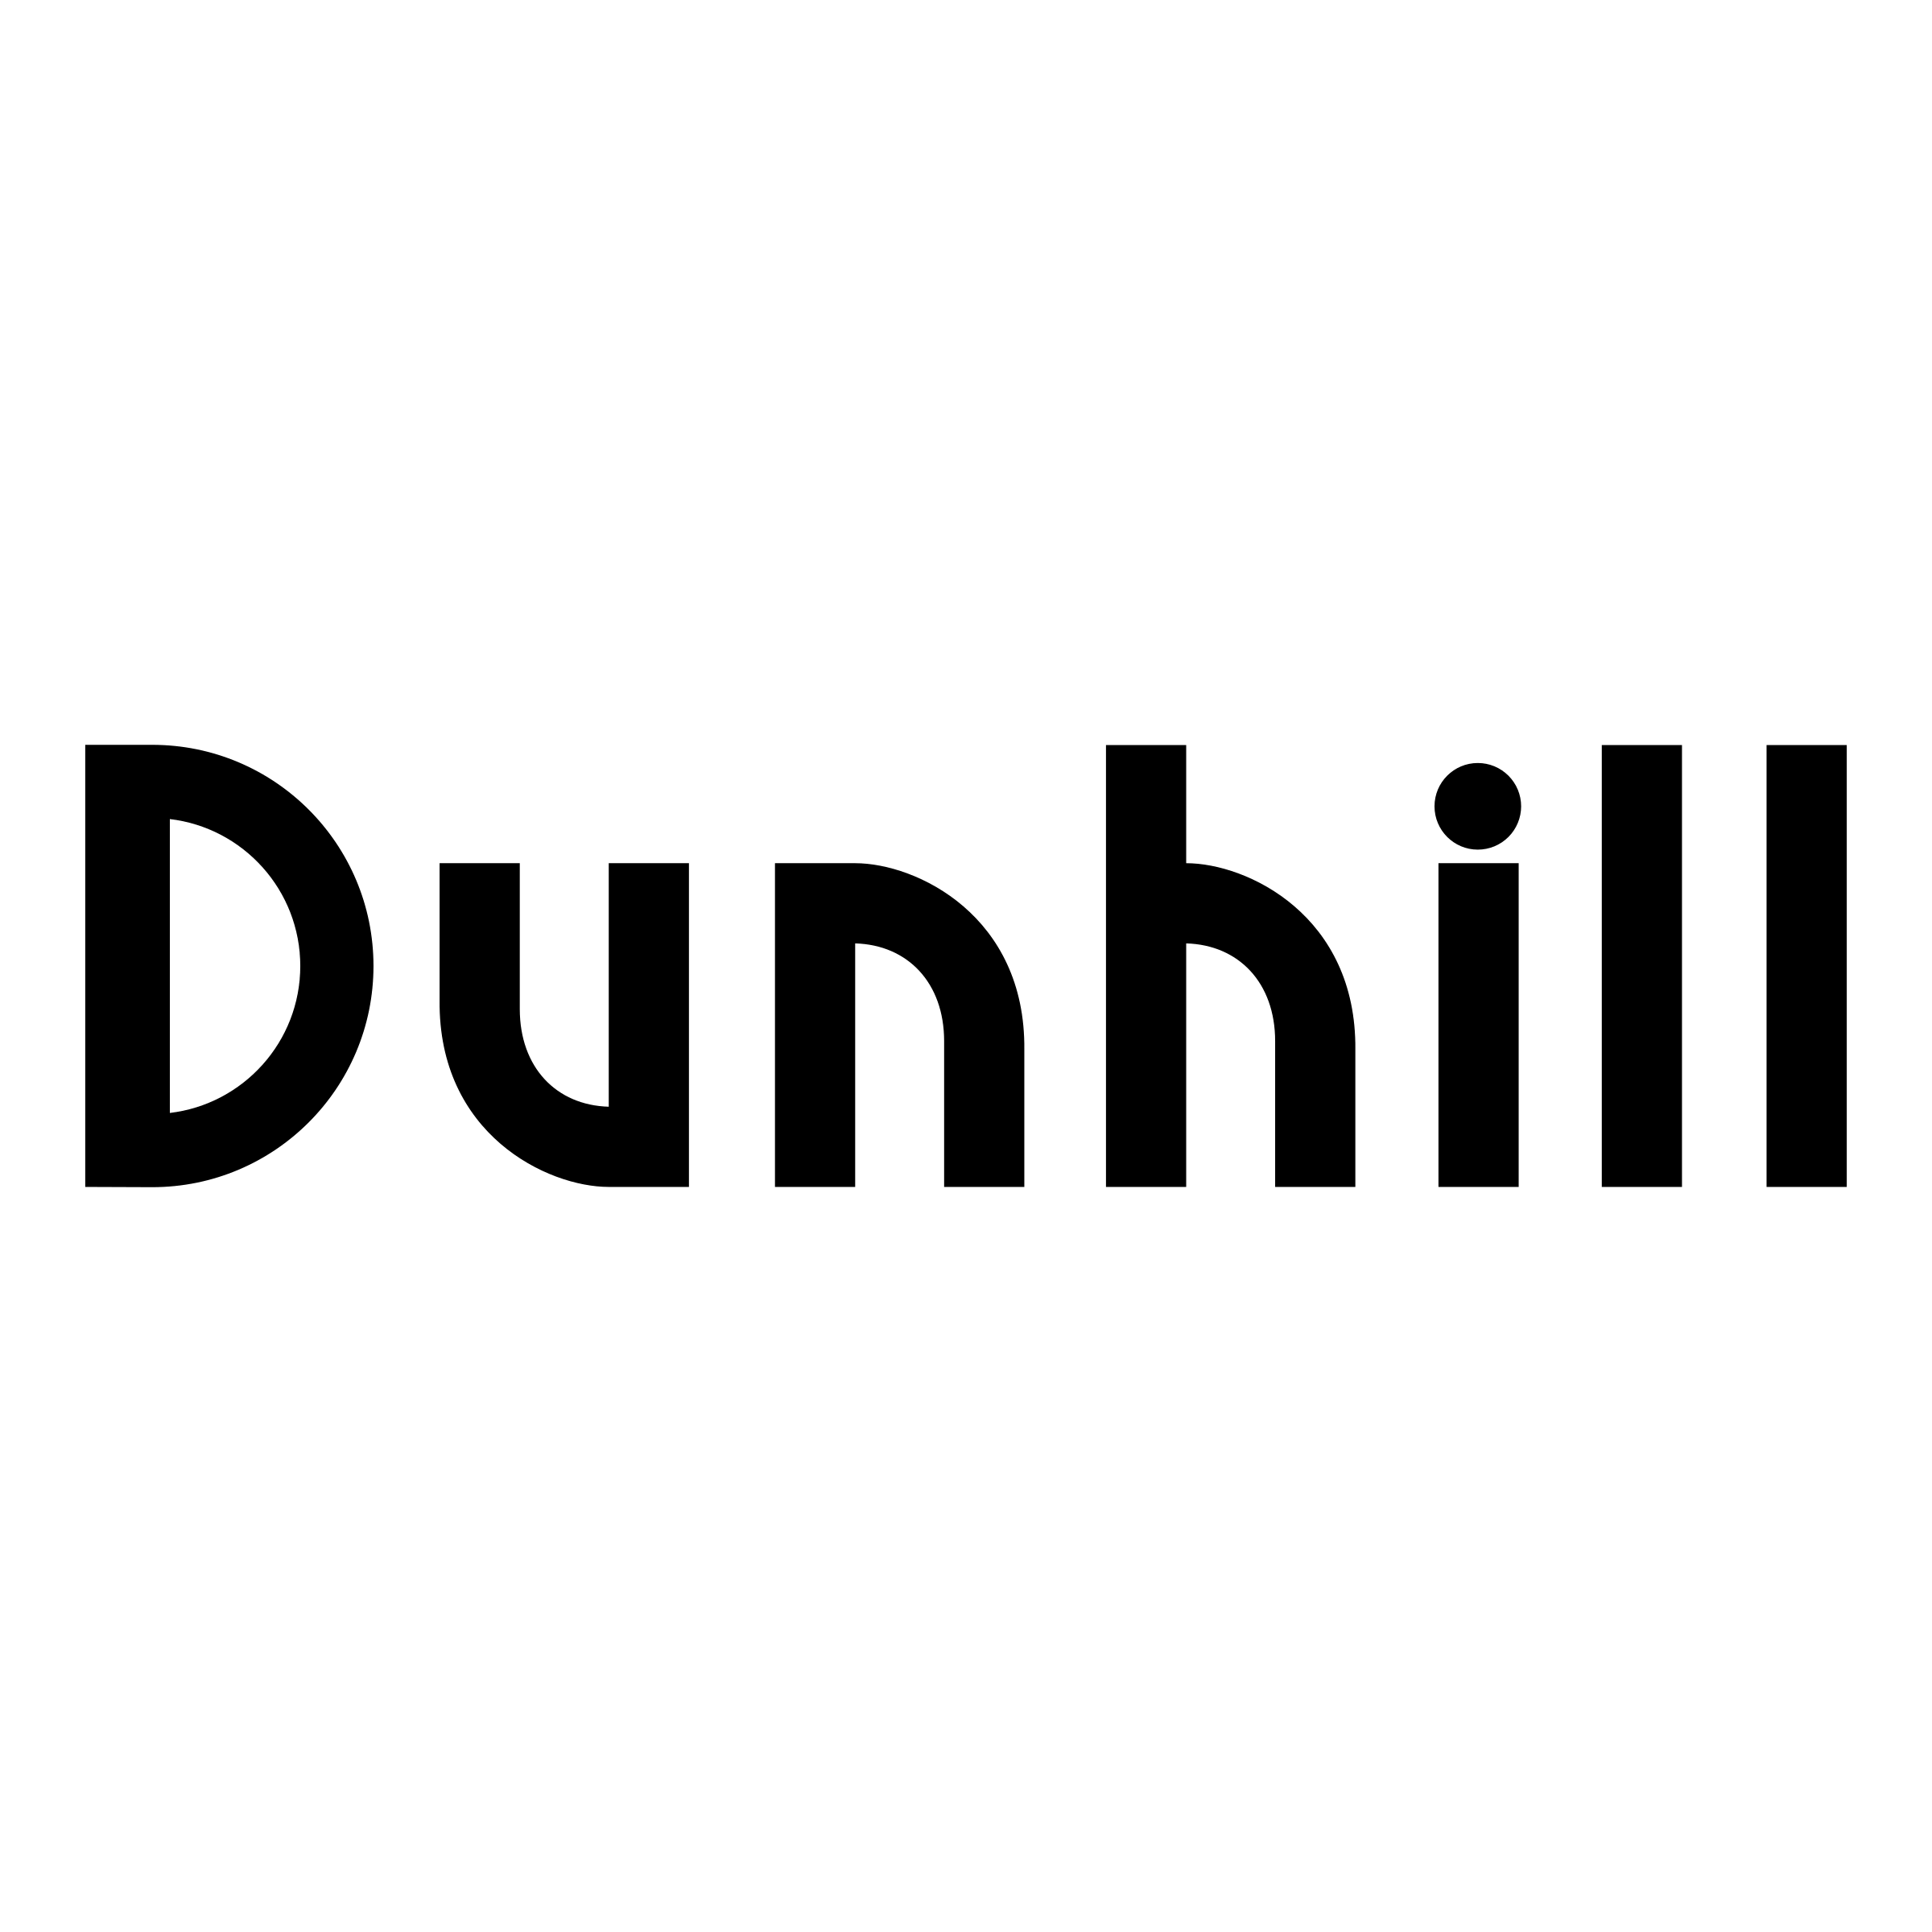 Dapulse Logo - Dunhill Logo PNG Transparent & SVG Vector